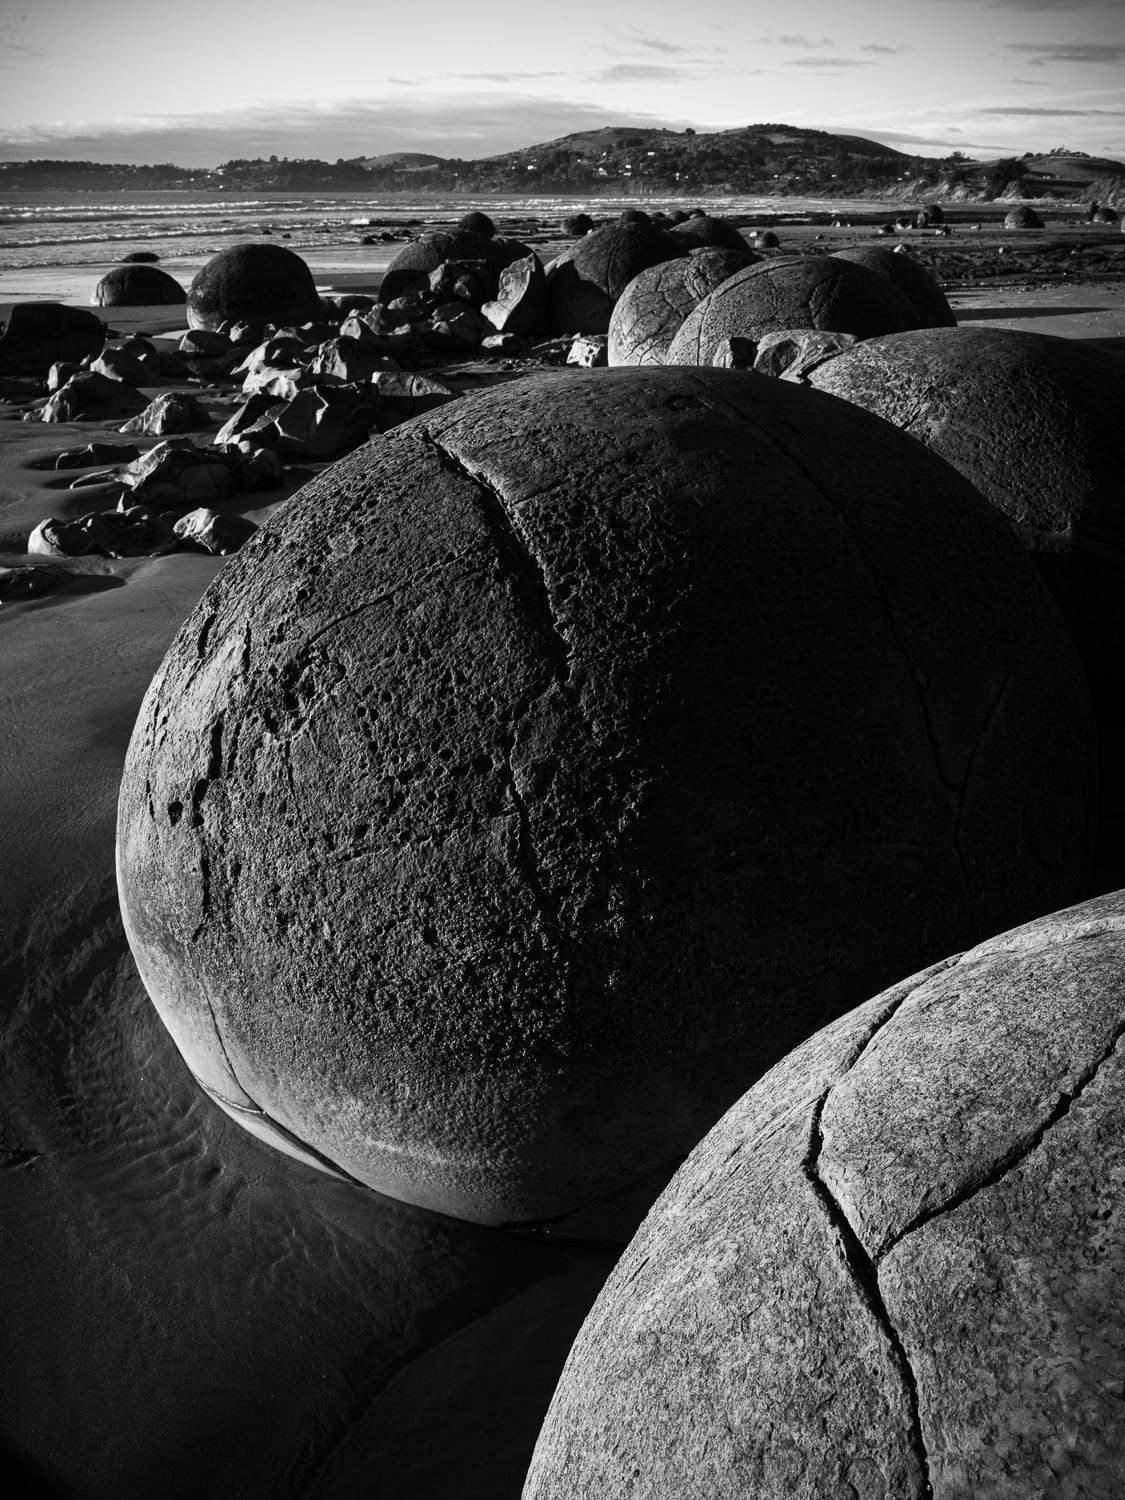 Dark view of giant boulder on a seashore-like land, Moeraki Eggs New Zealand Art